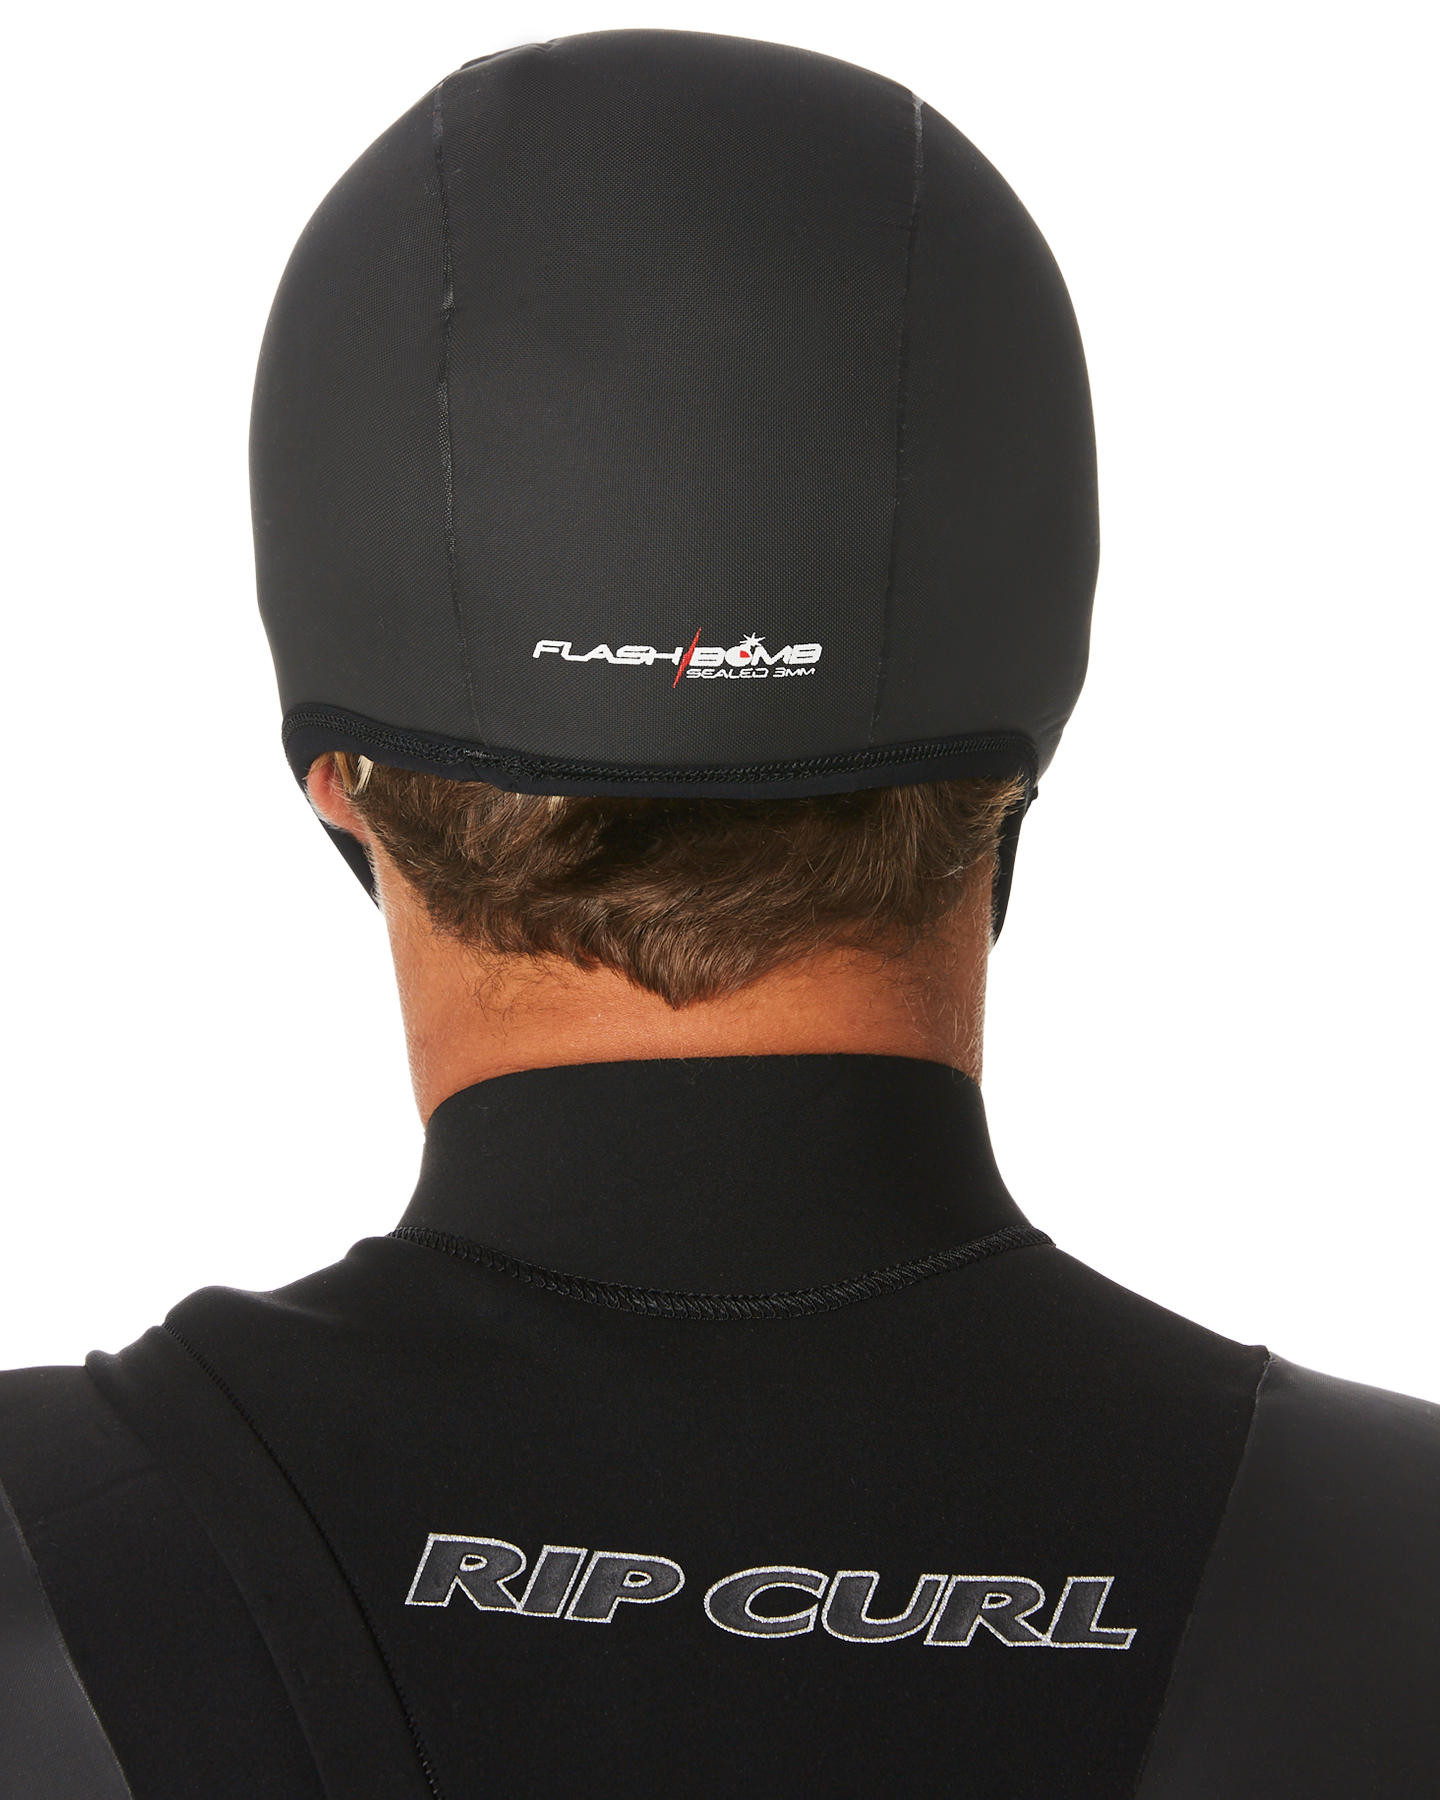 Rip Curl Flashbomb 3Mm Surf Cap - Black | SurfStitch